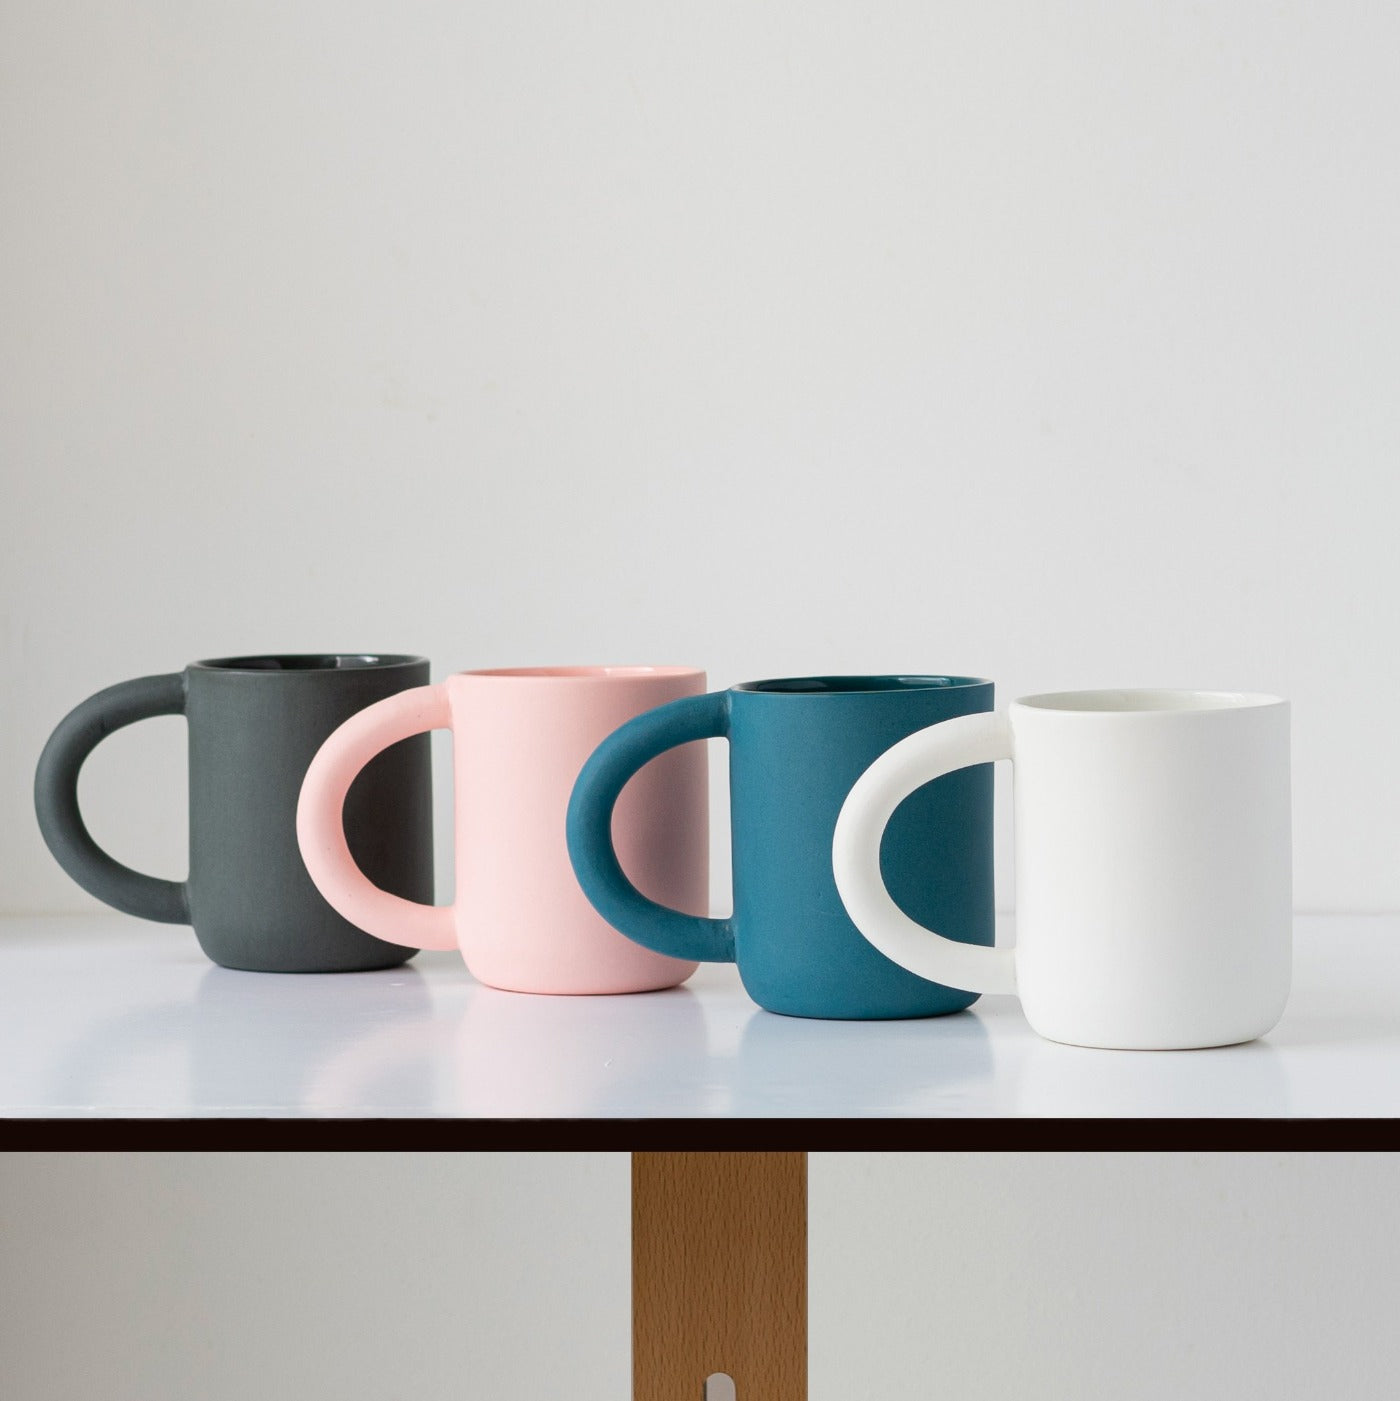 laureanne kootstra design hand made ceramic white porcelain mug